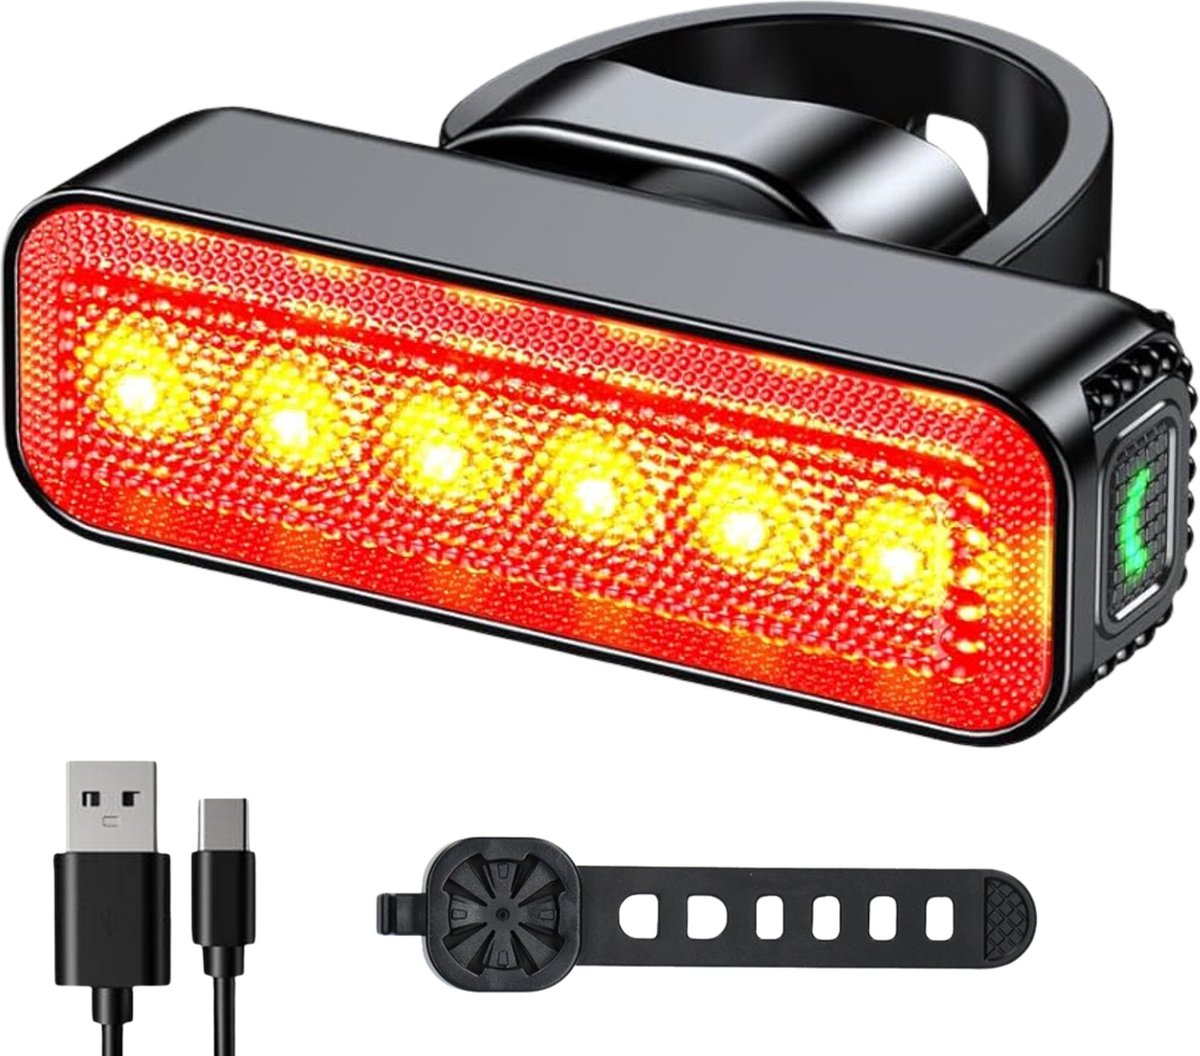 Inlustro Fietslamp LED Achterlicht - Waterdicht Fietslampje - Fietslicht - USB Oplaadbaar - Rood - Inlustro